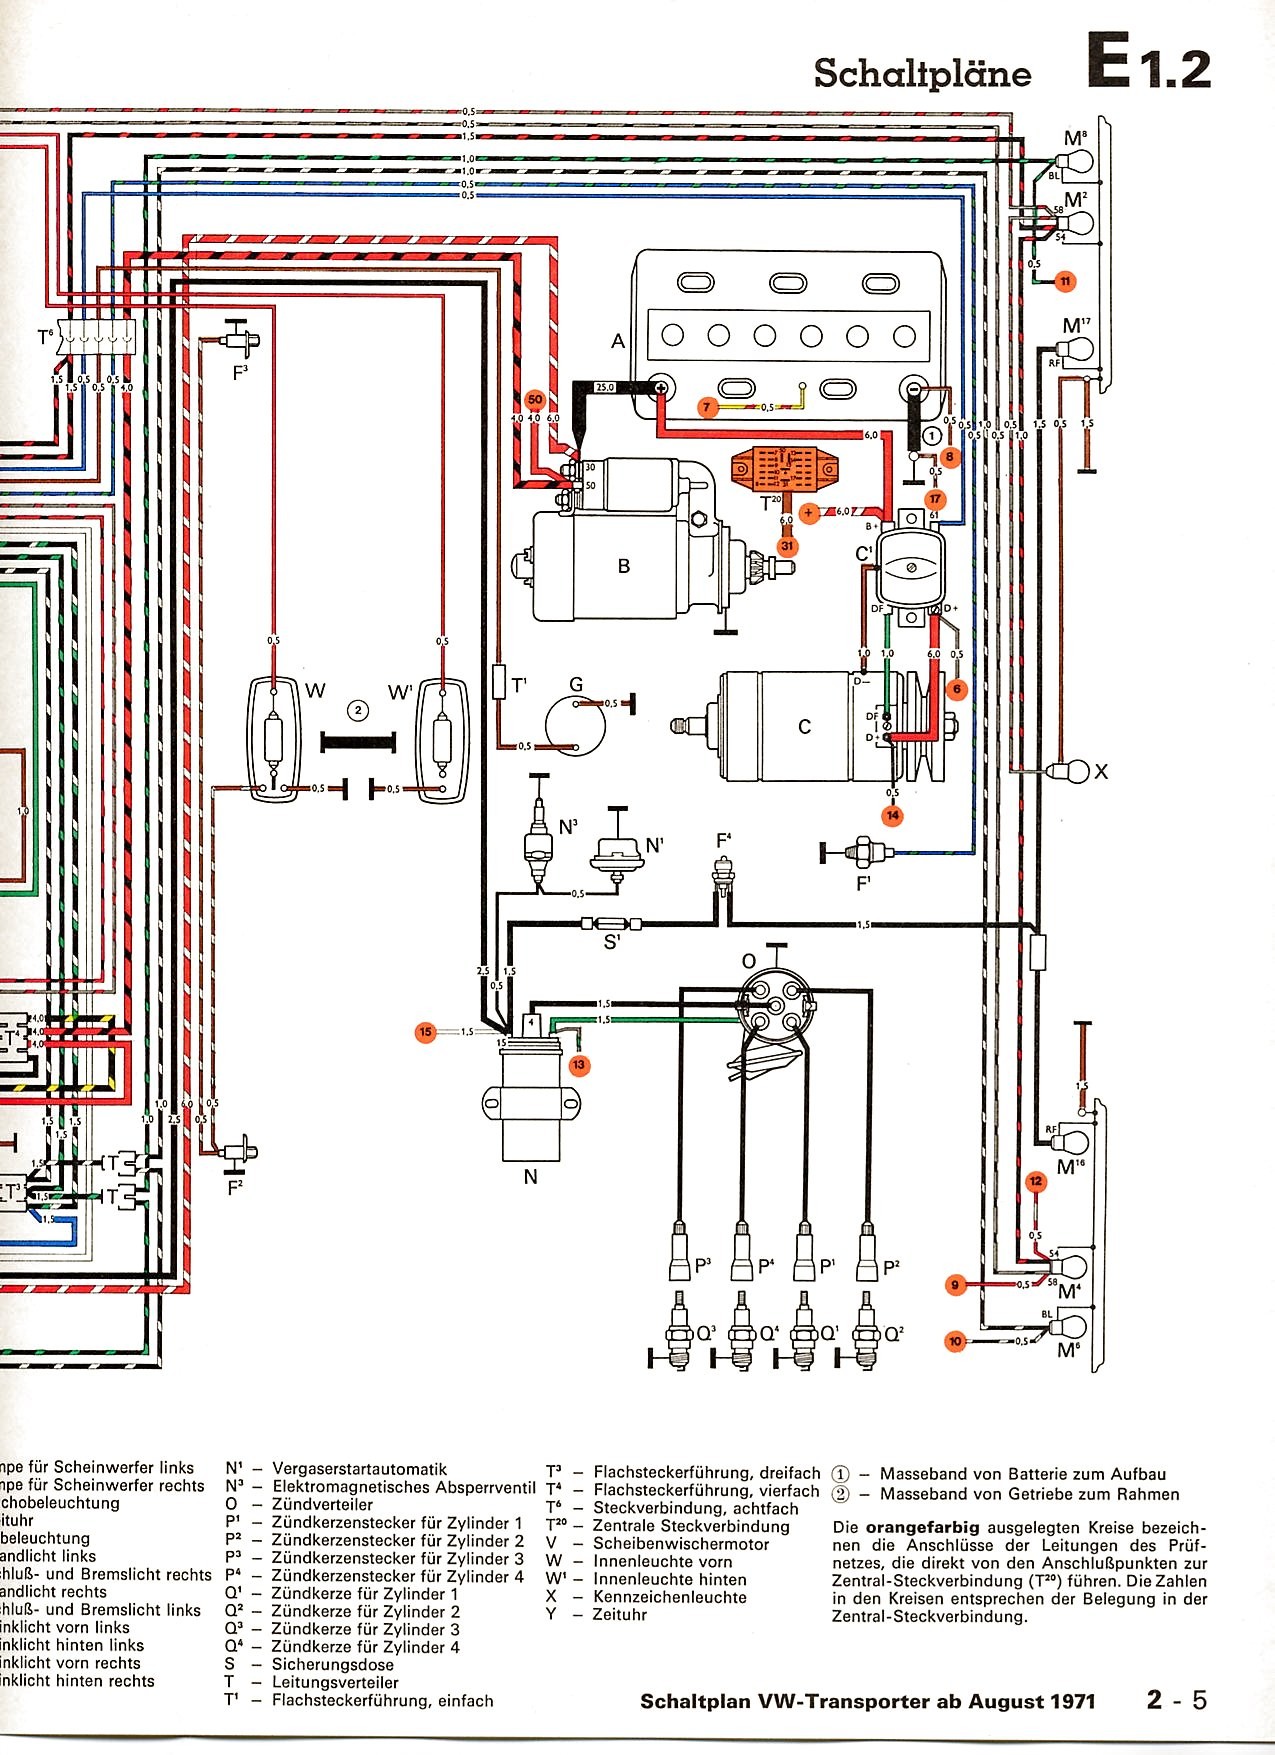 Vw 1600 Engine Diagram 69 Beetle Engine Wiring Harness Diagrams Wiring Diagram Paper Of Vw 1600 Engine Diagram